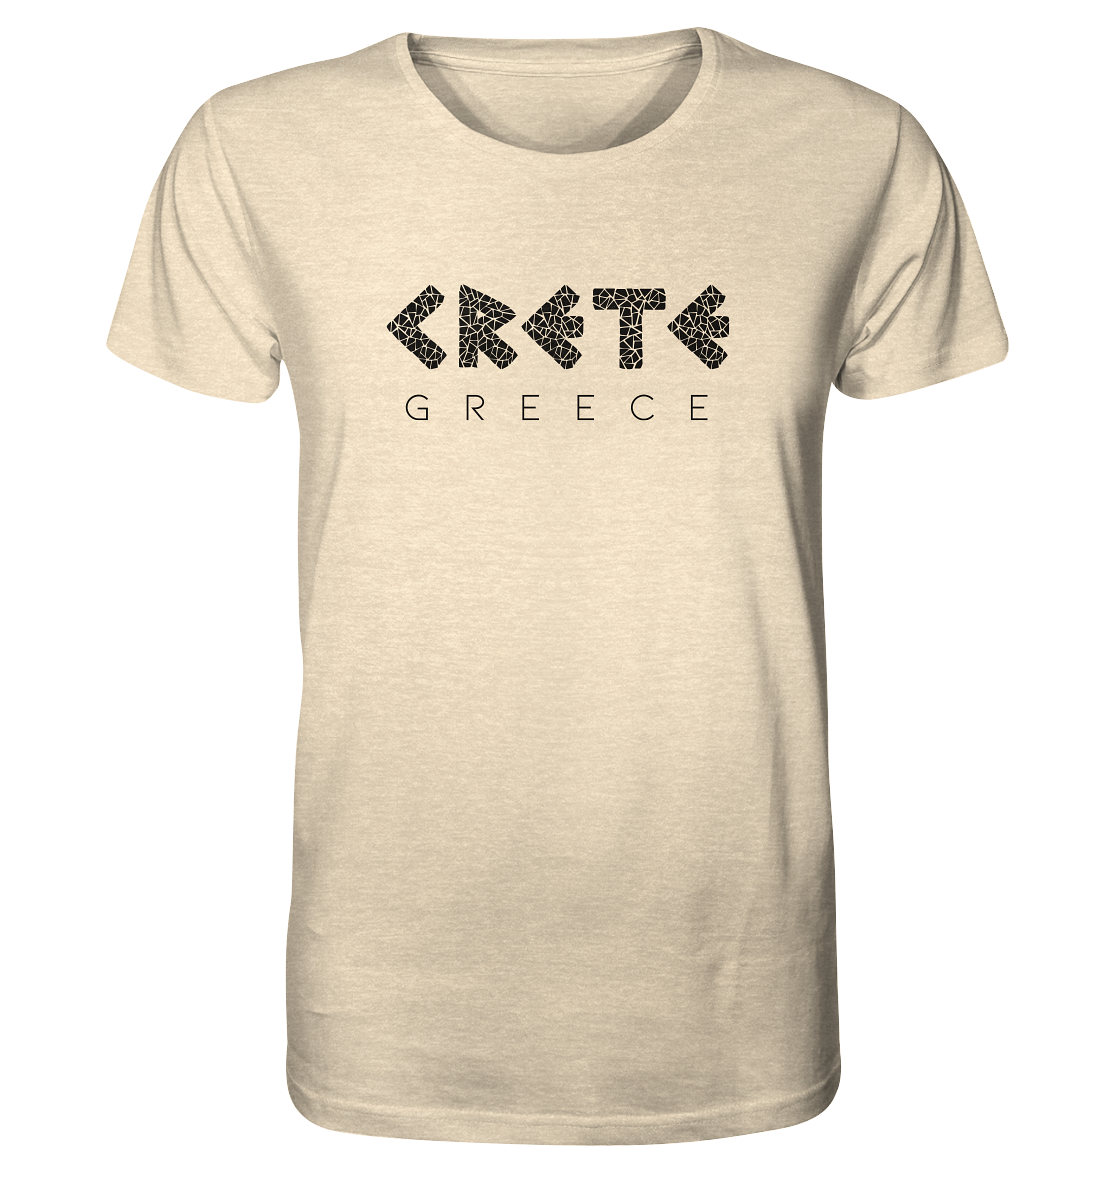 Crete Greece Mosaic - Organic Shirt